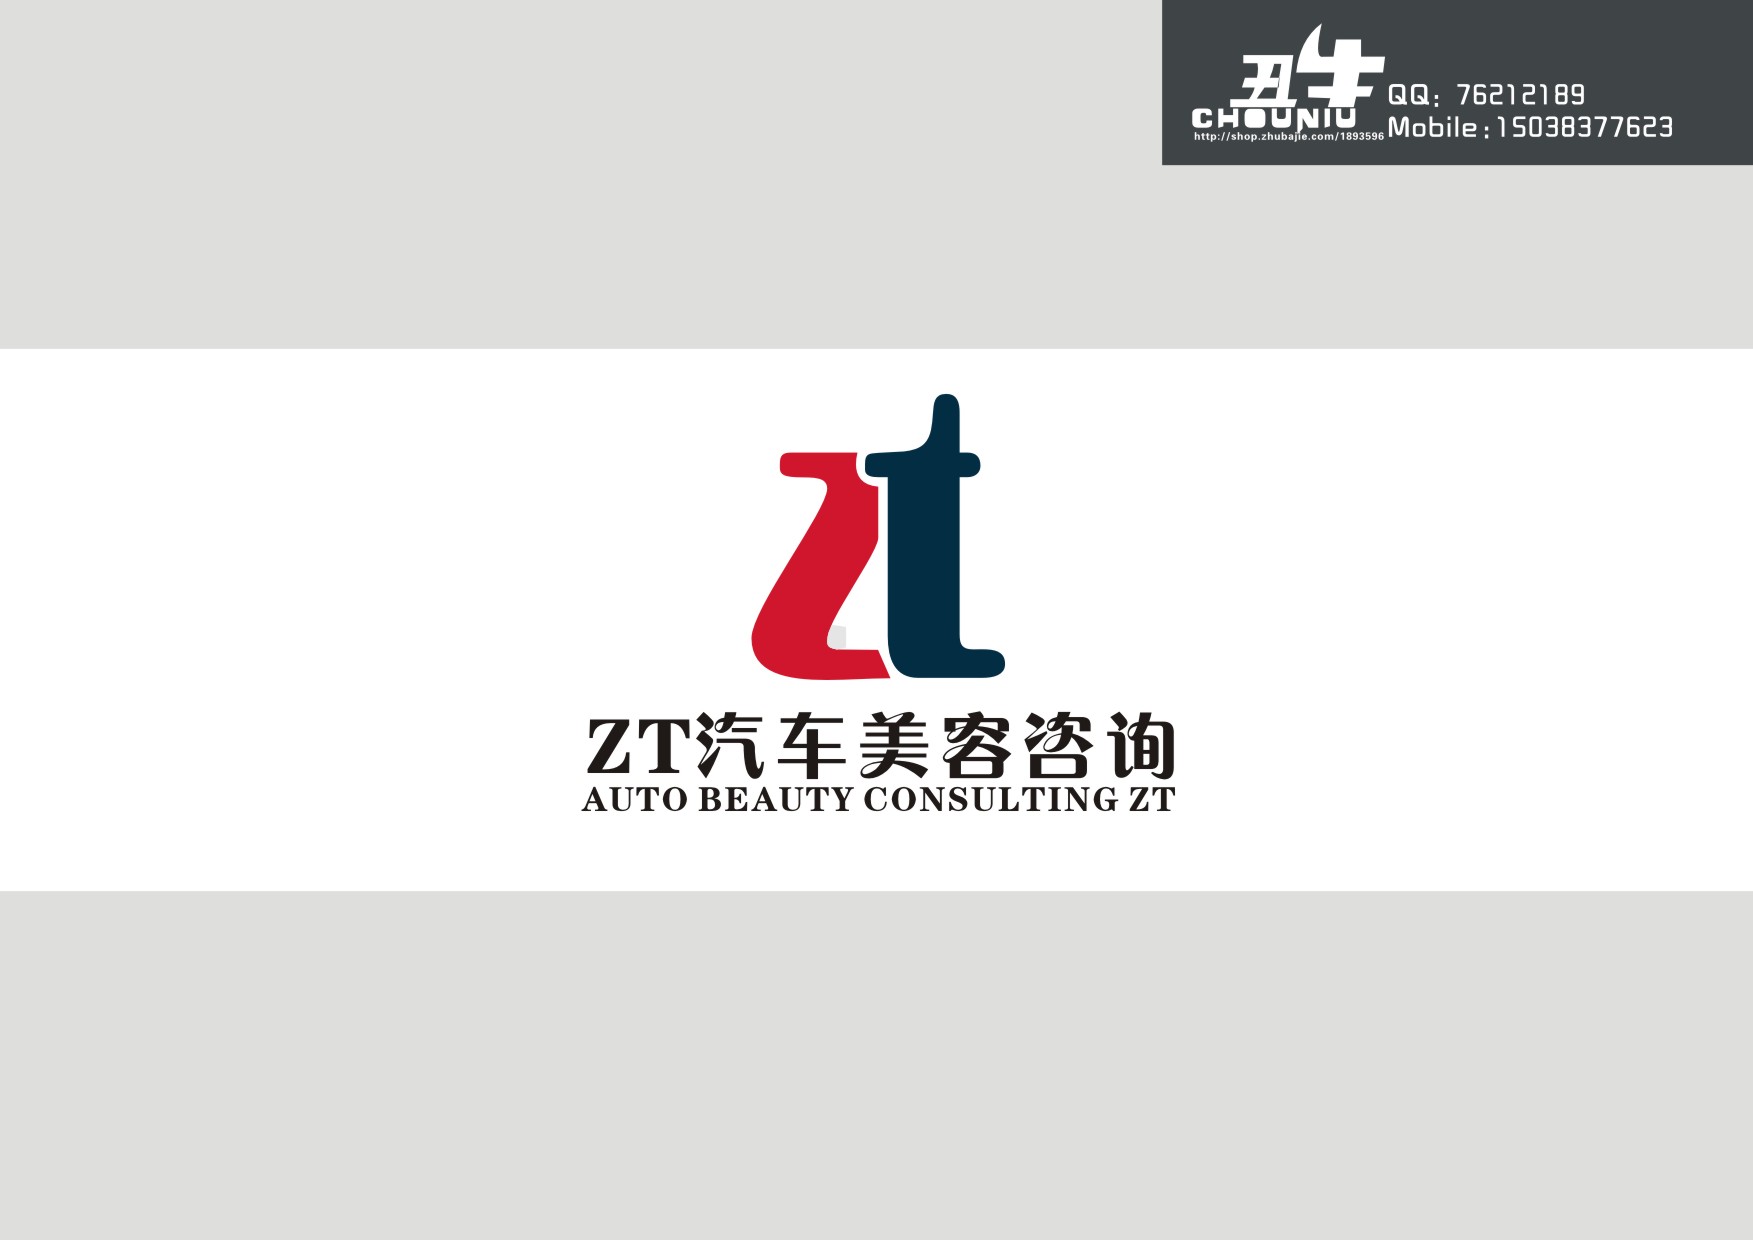 ZT汽车美容咨询LOGO设计以红蓝相配和品牌字母做创意